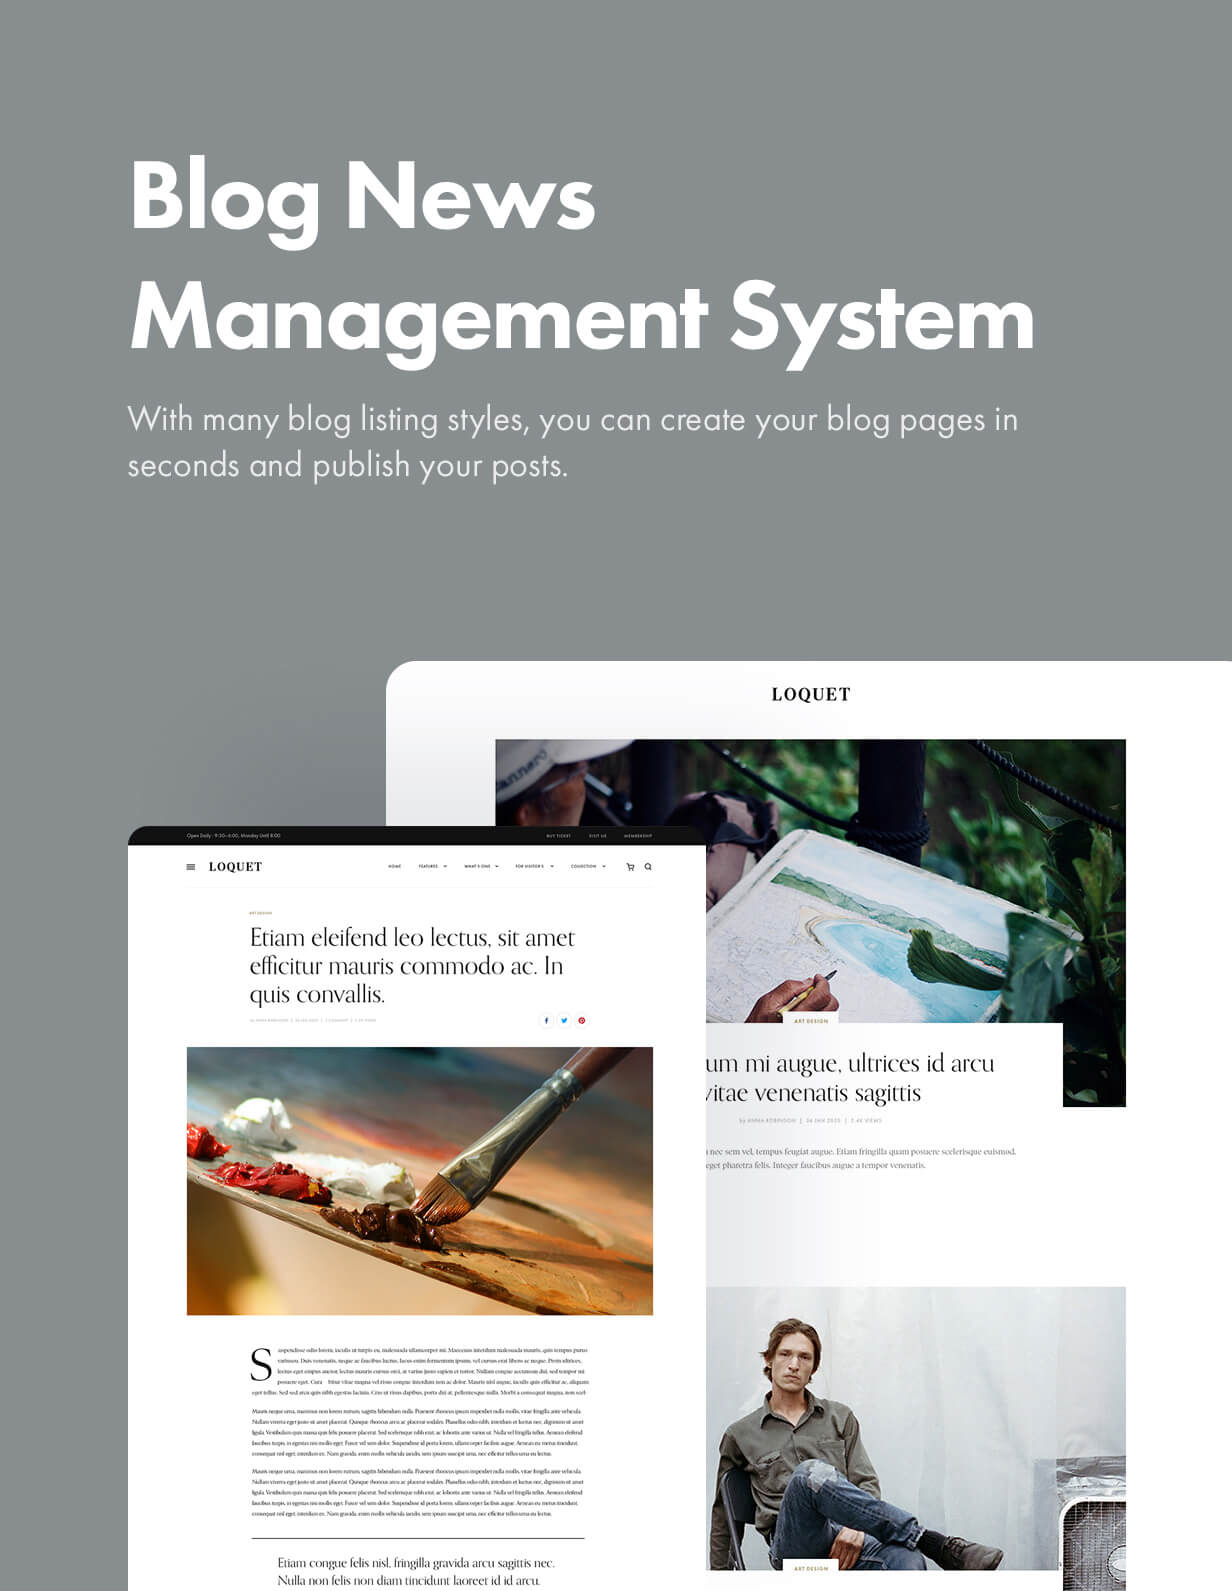 Blog news management system